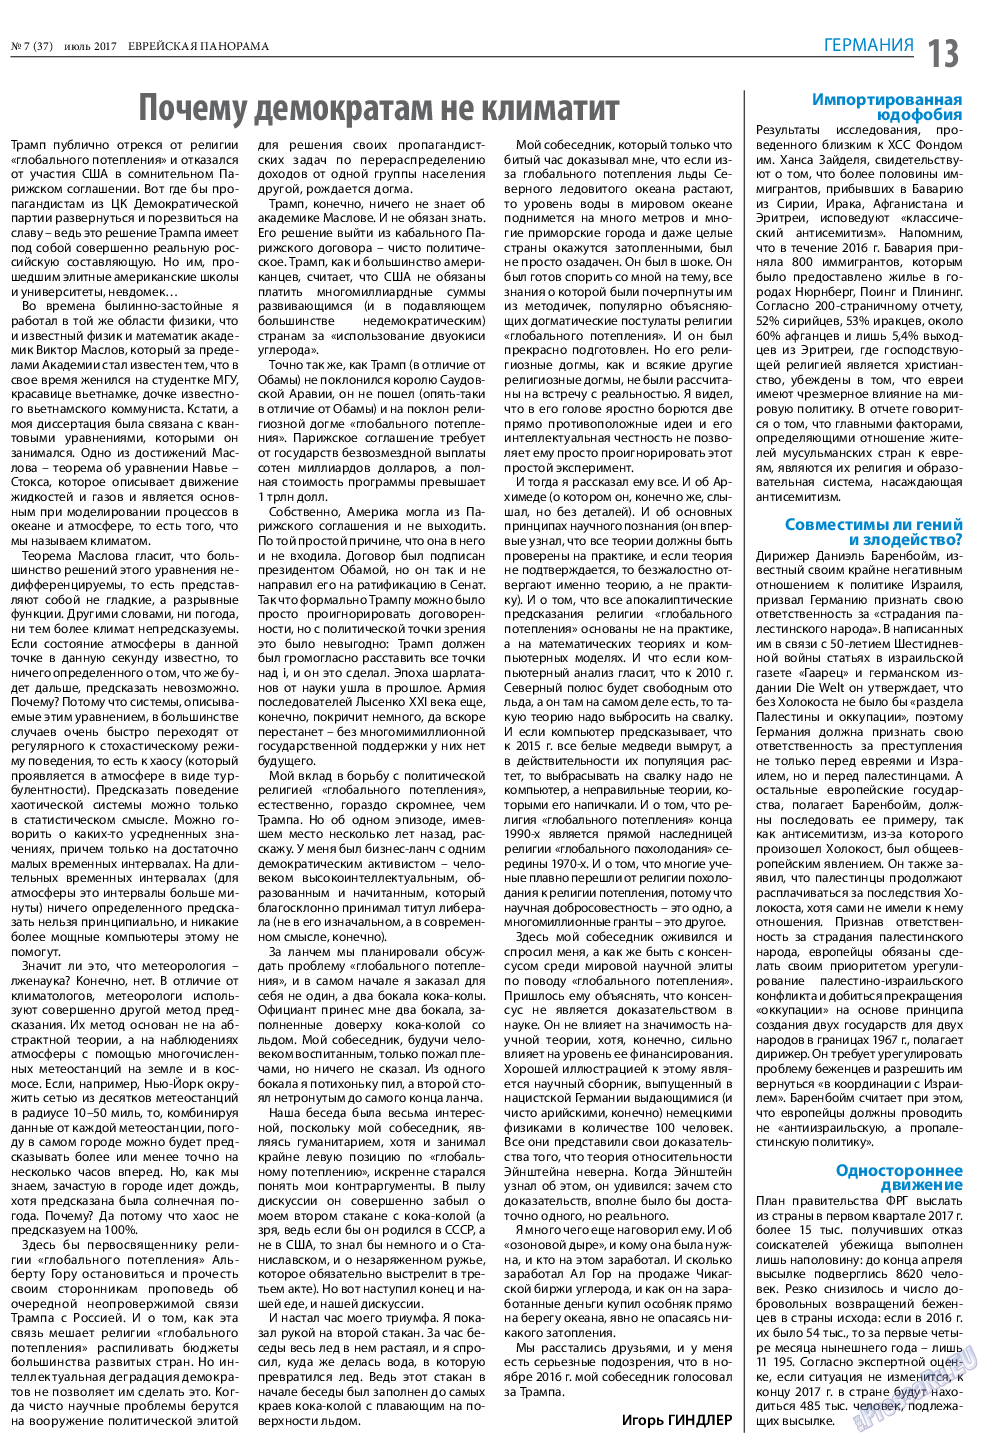 Еврейская панорама, газета. 2017 №7 стр.13